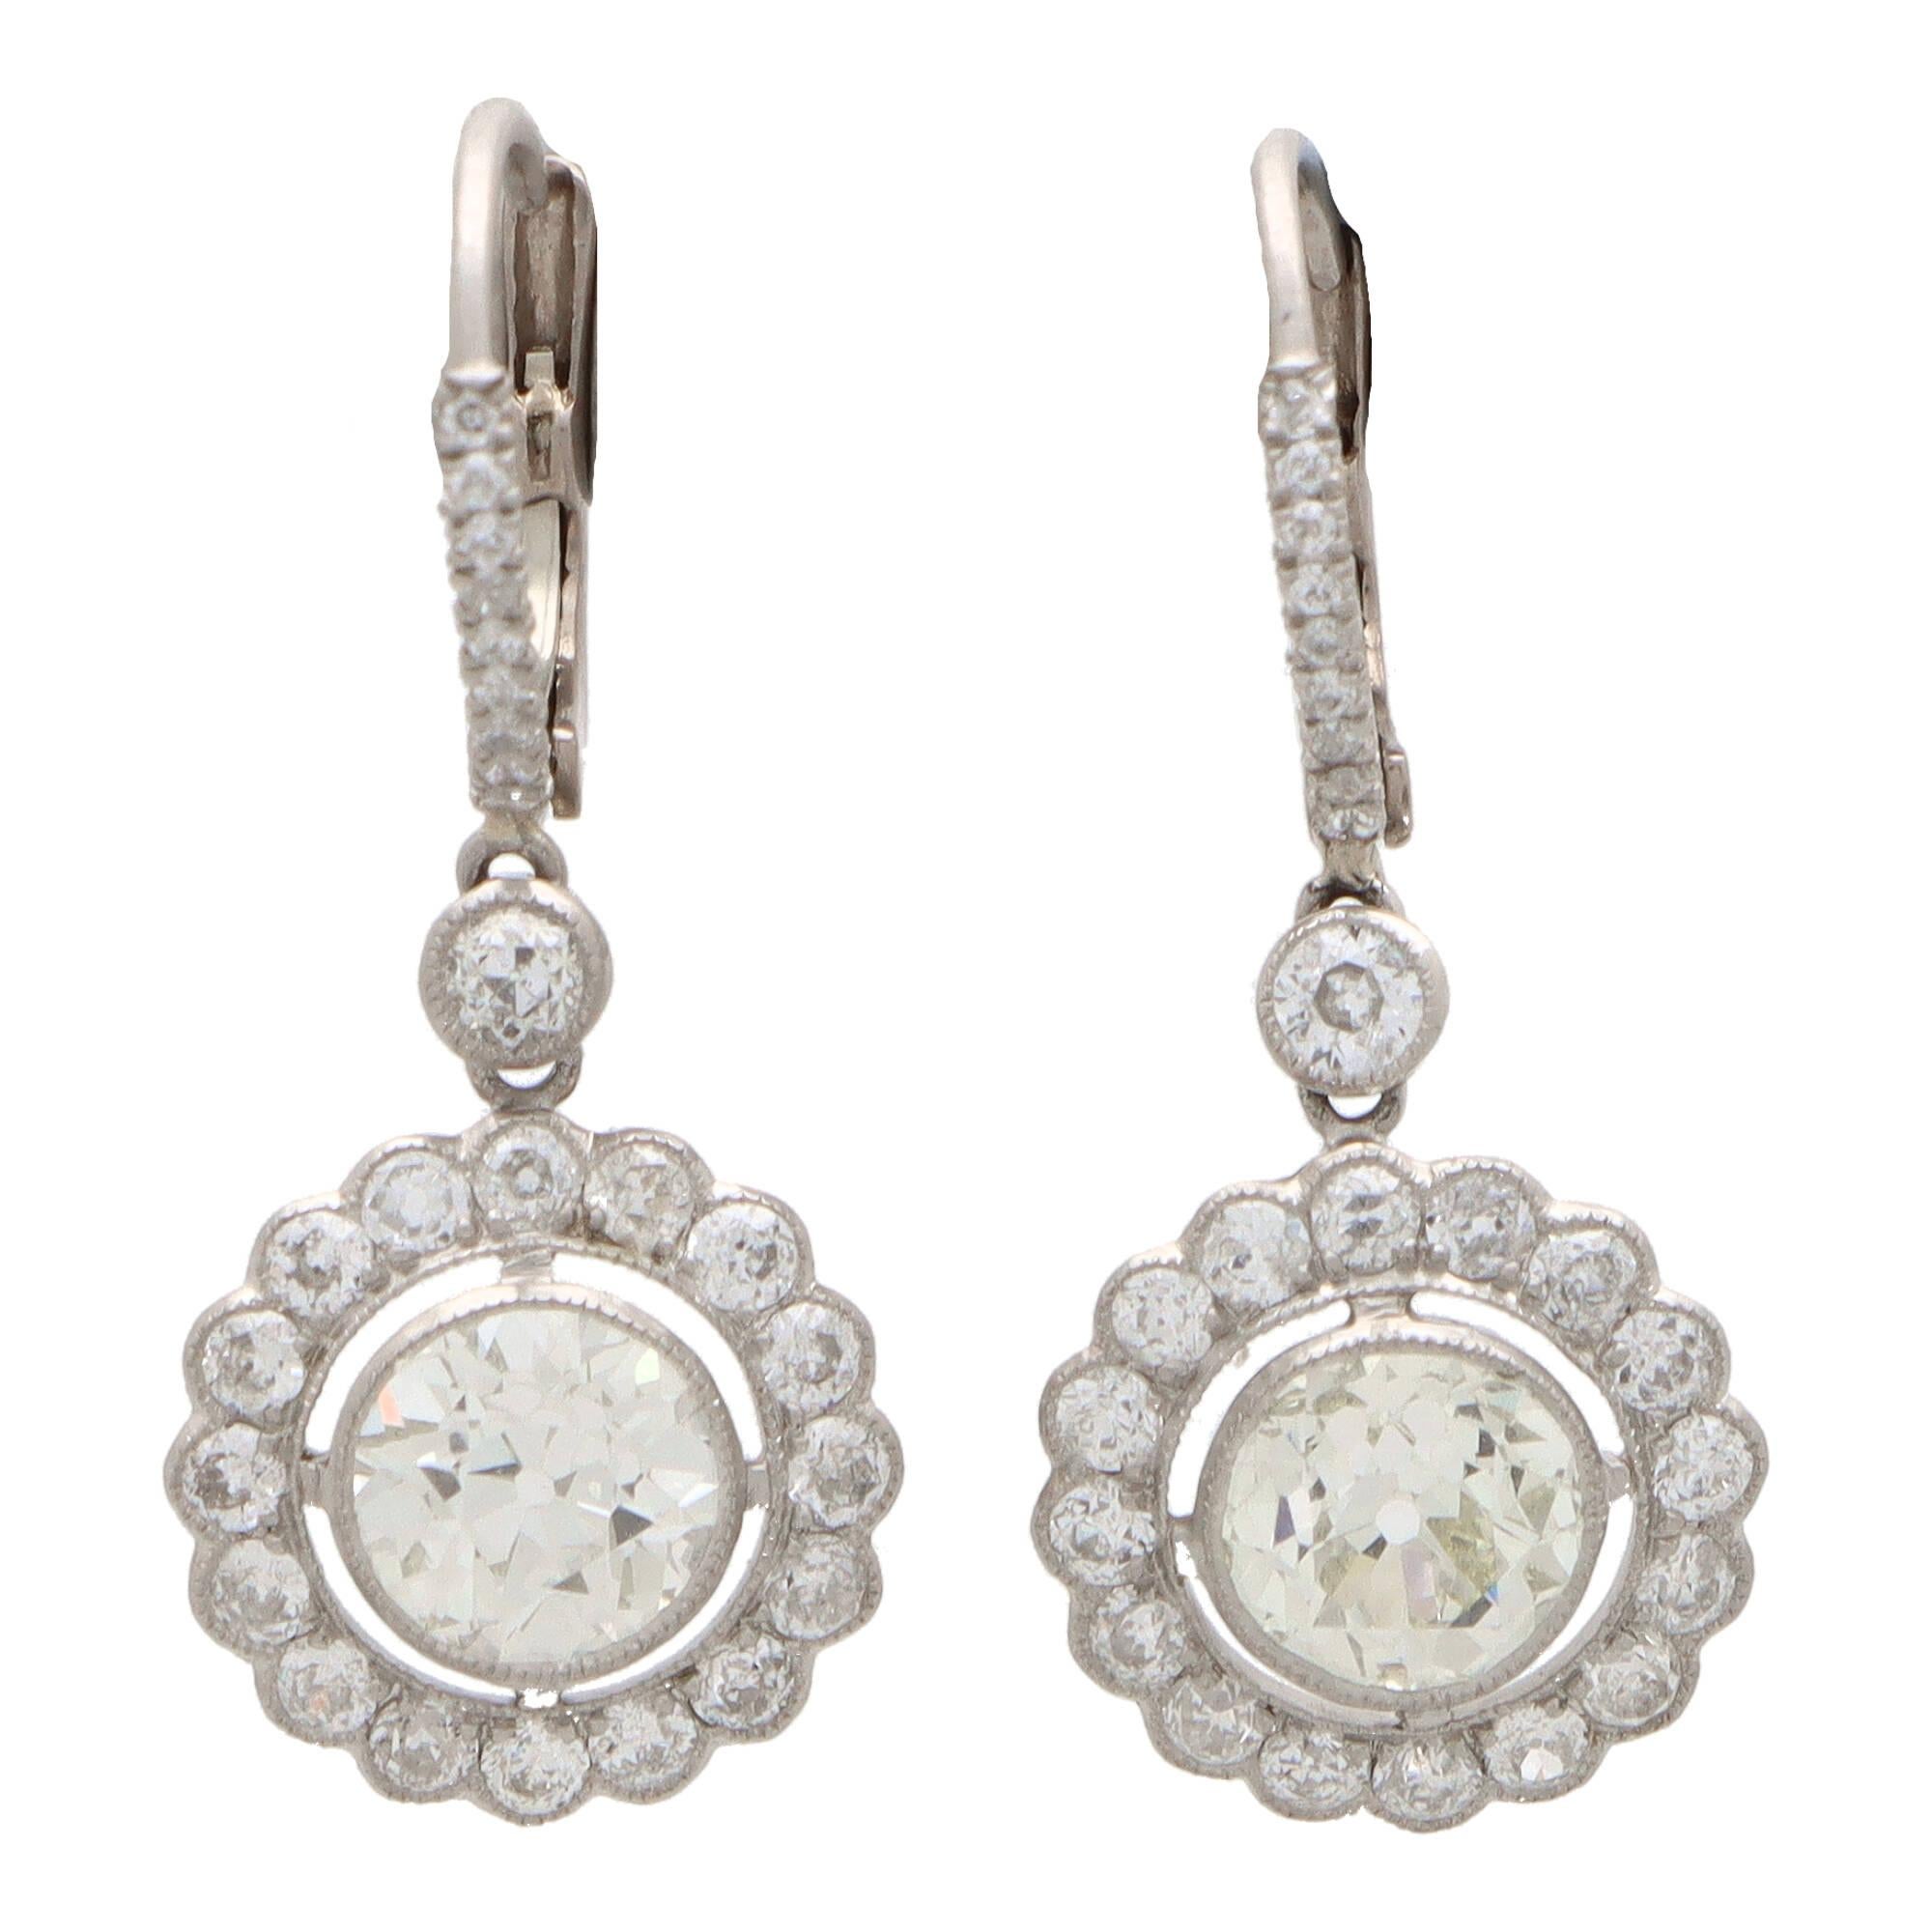 Old Mine Cut Vintage Inspired Old Cut Diamond Cluster Drop Earrings Set in Platinum